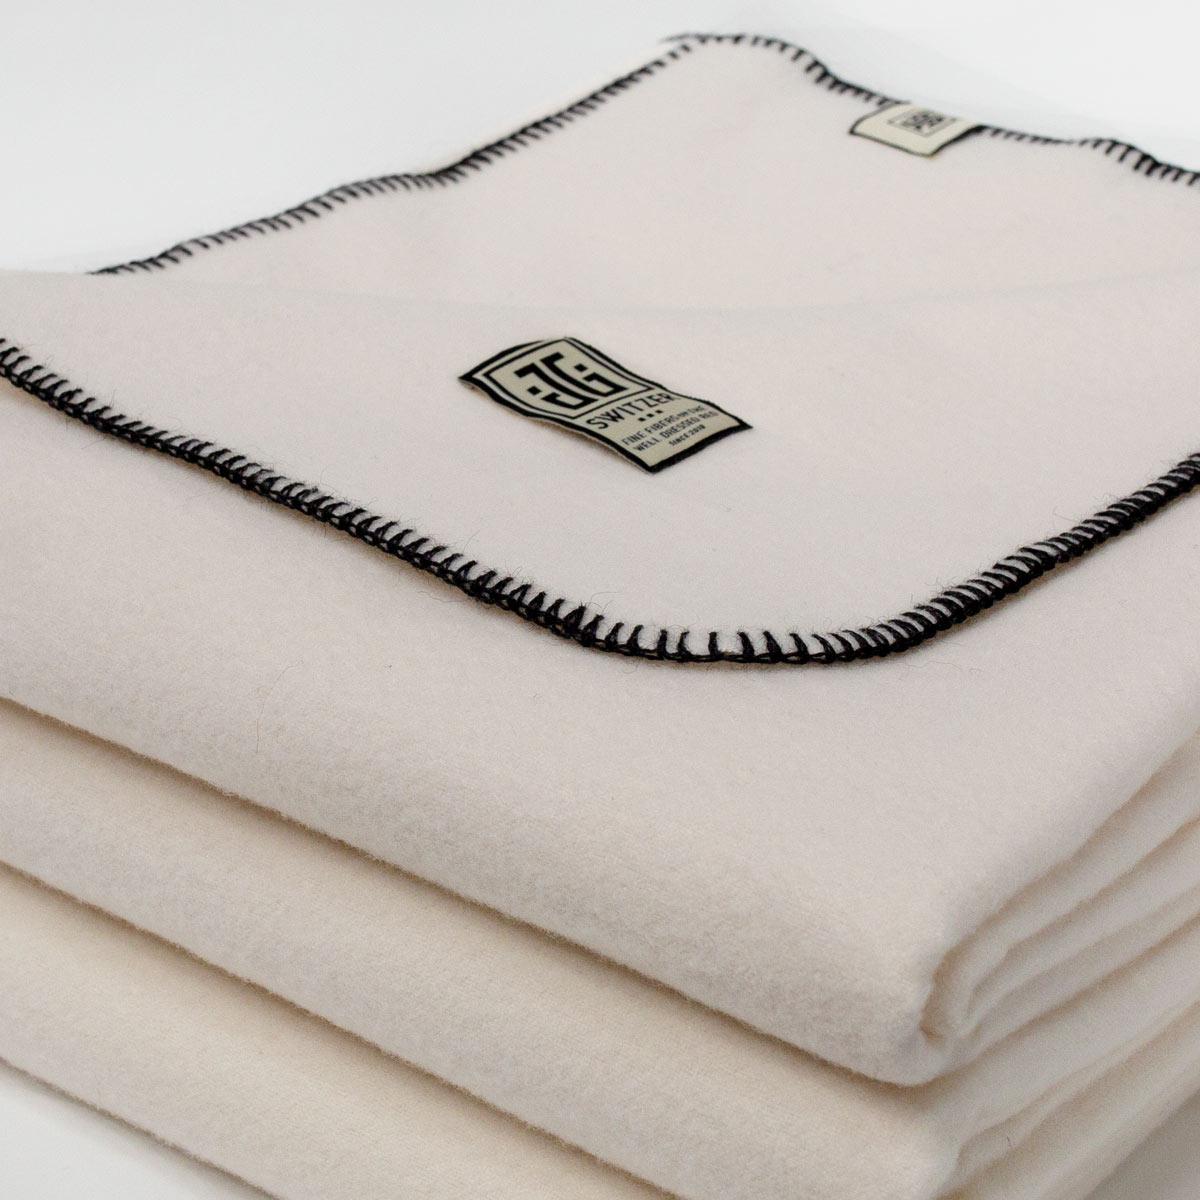 JG Switzer Classic Blanket in Black Cashmere Blend- King For Sale 2